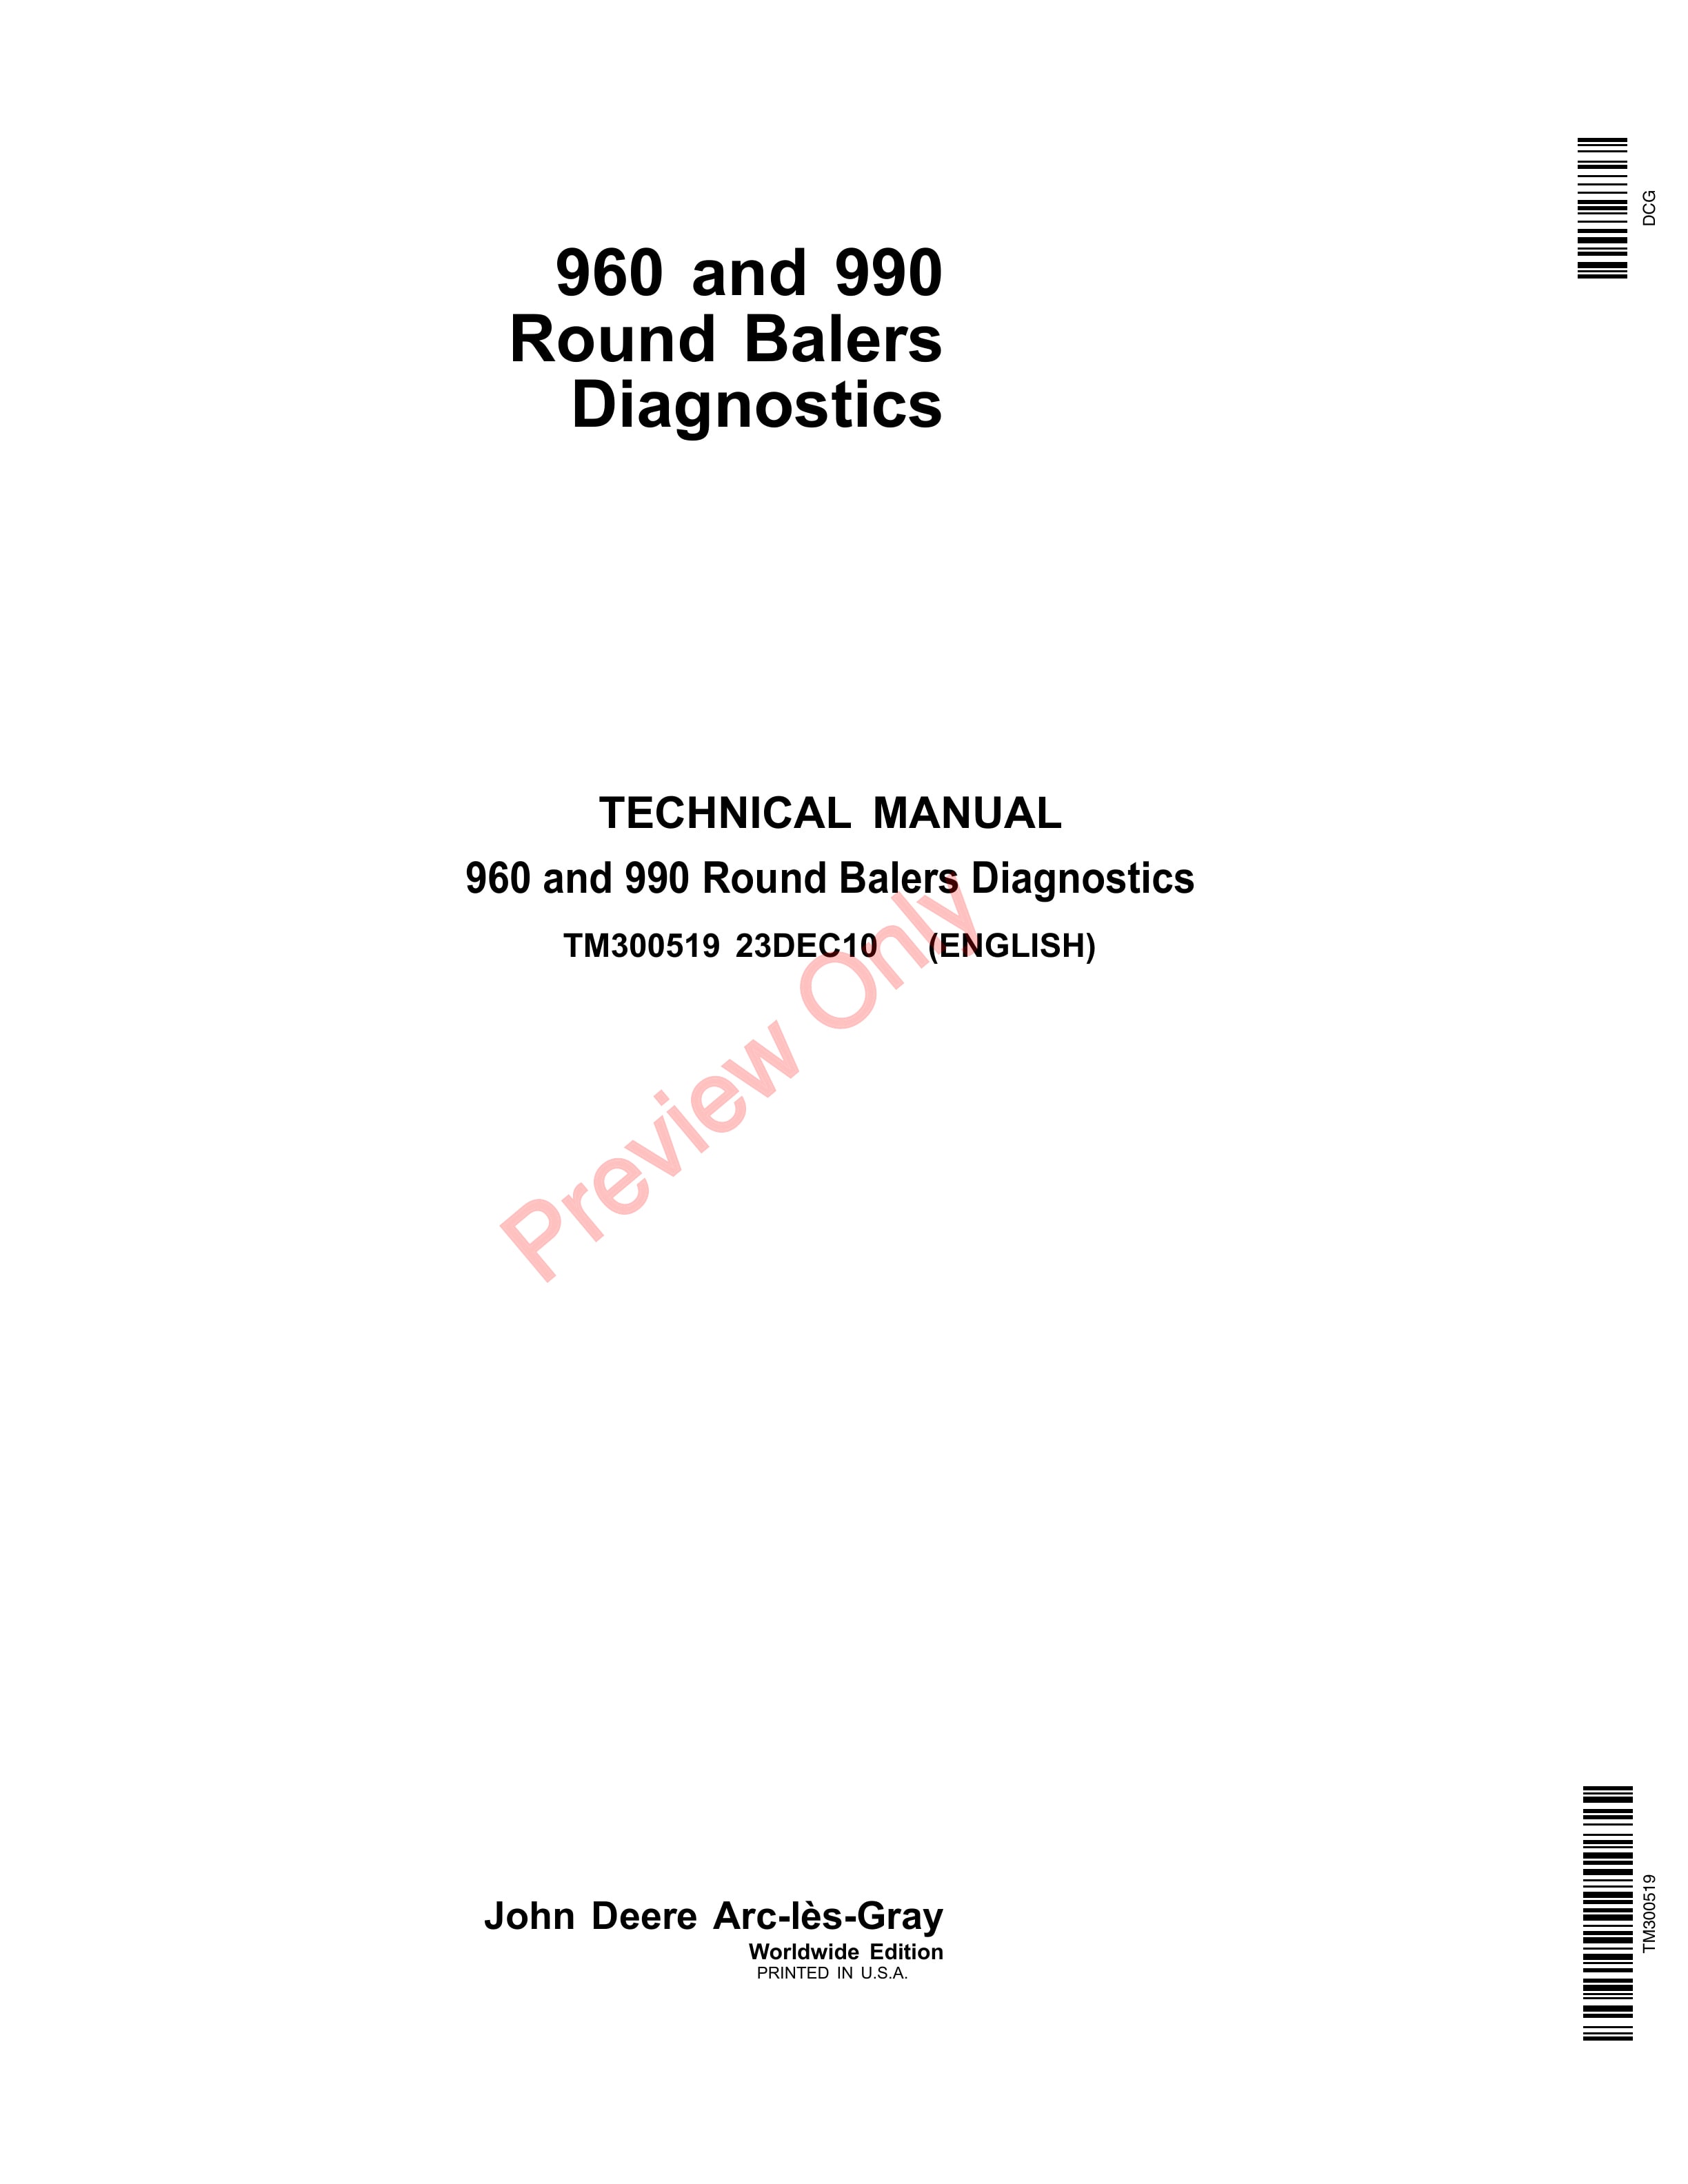 John Deere 960 and 990 Round Balerss Technical Manual TM300519 23DEC10 1